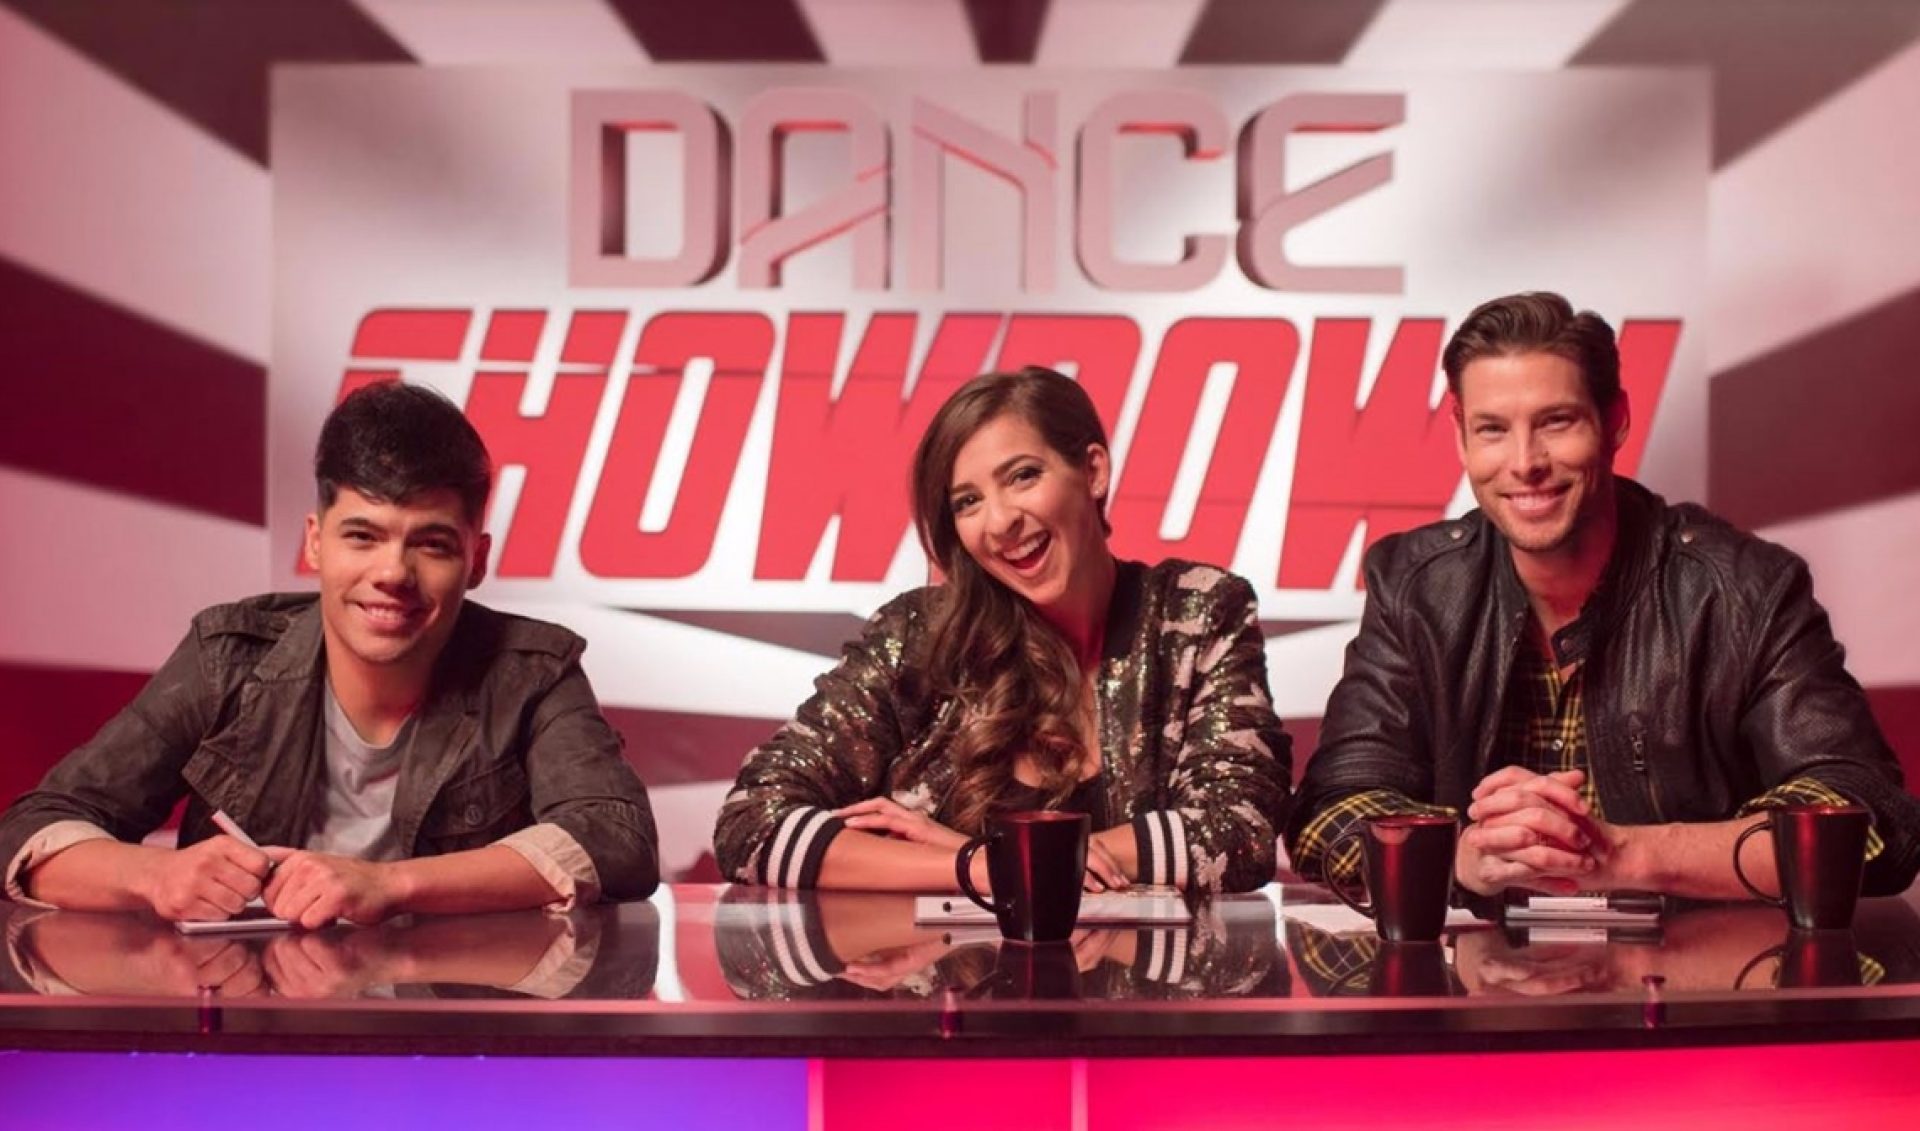 Dominic ‘D-Trix’ Sandoval’s ‘Dance Showdown’ Is Back For Season 5 On Go90